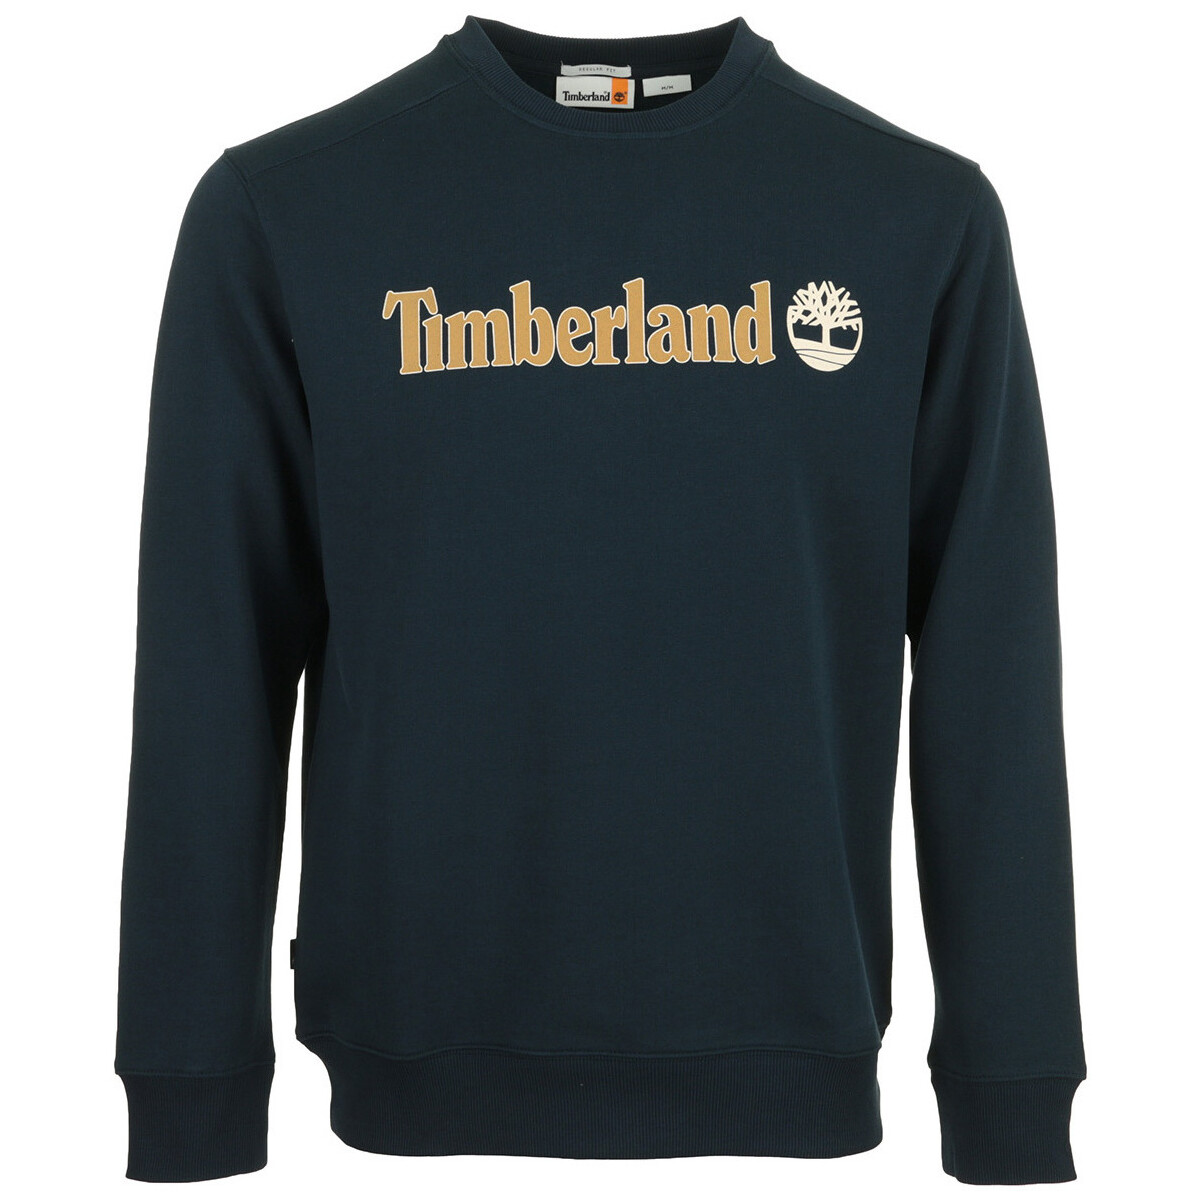 textil Hombre Sudaderas Timberland Linear Logo Crew Neck Azul